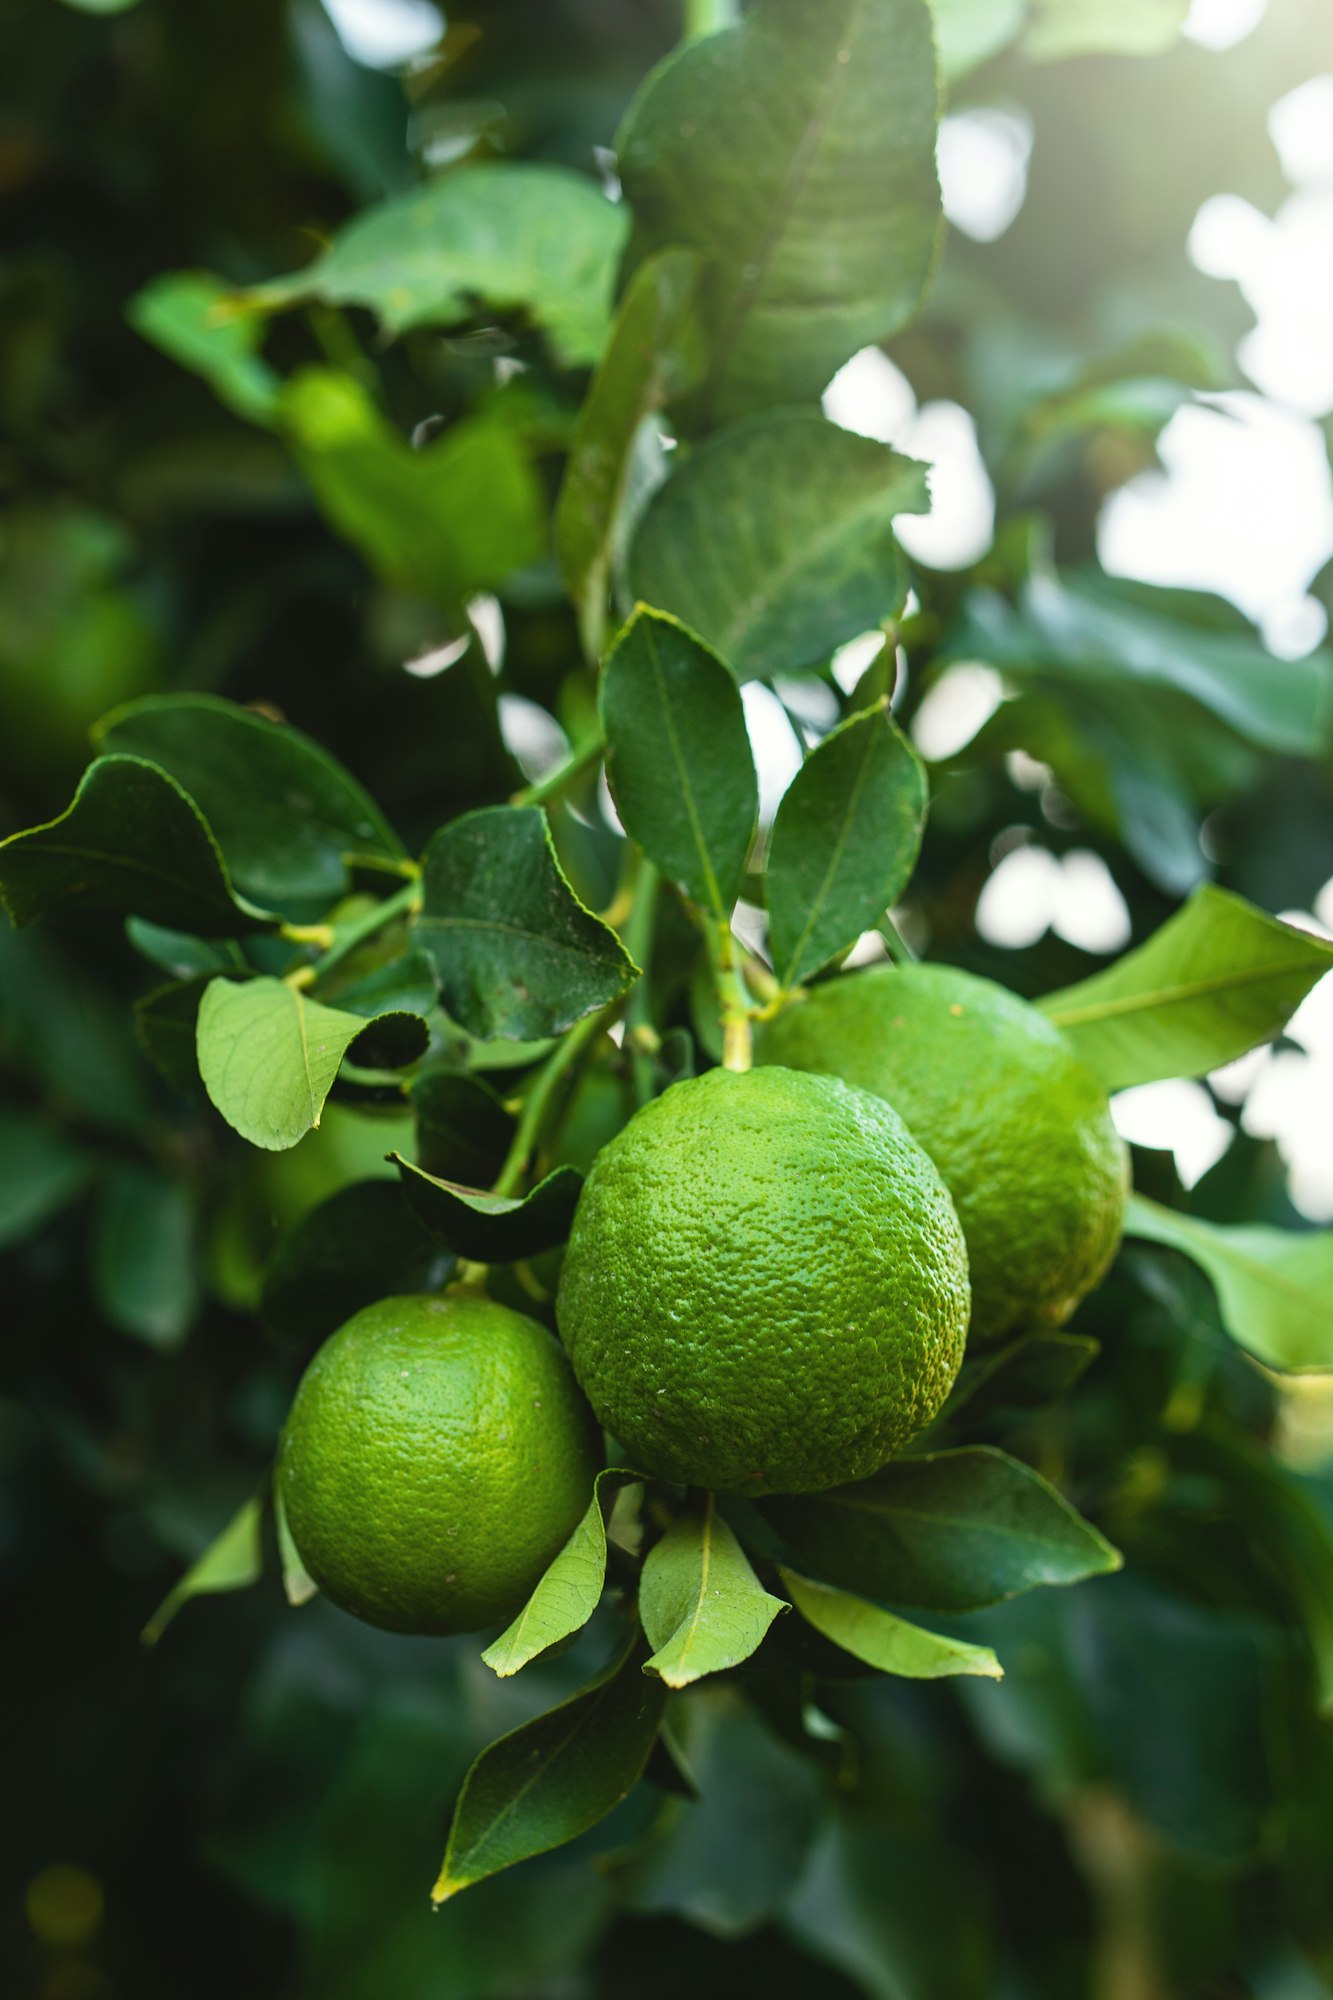 Ripe green lemons on the small evergreen tree